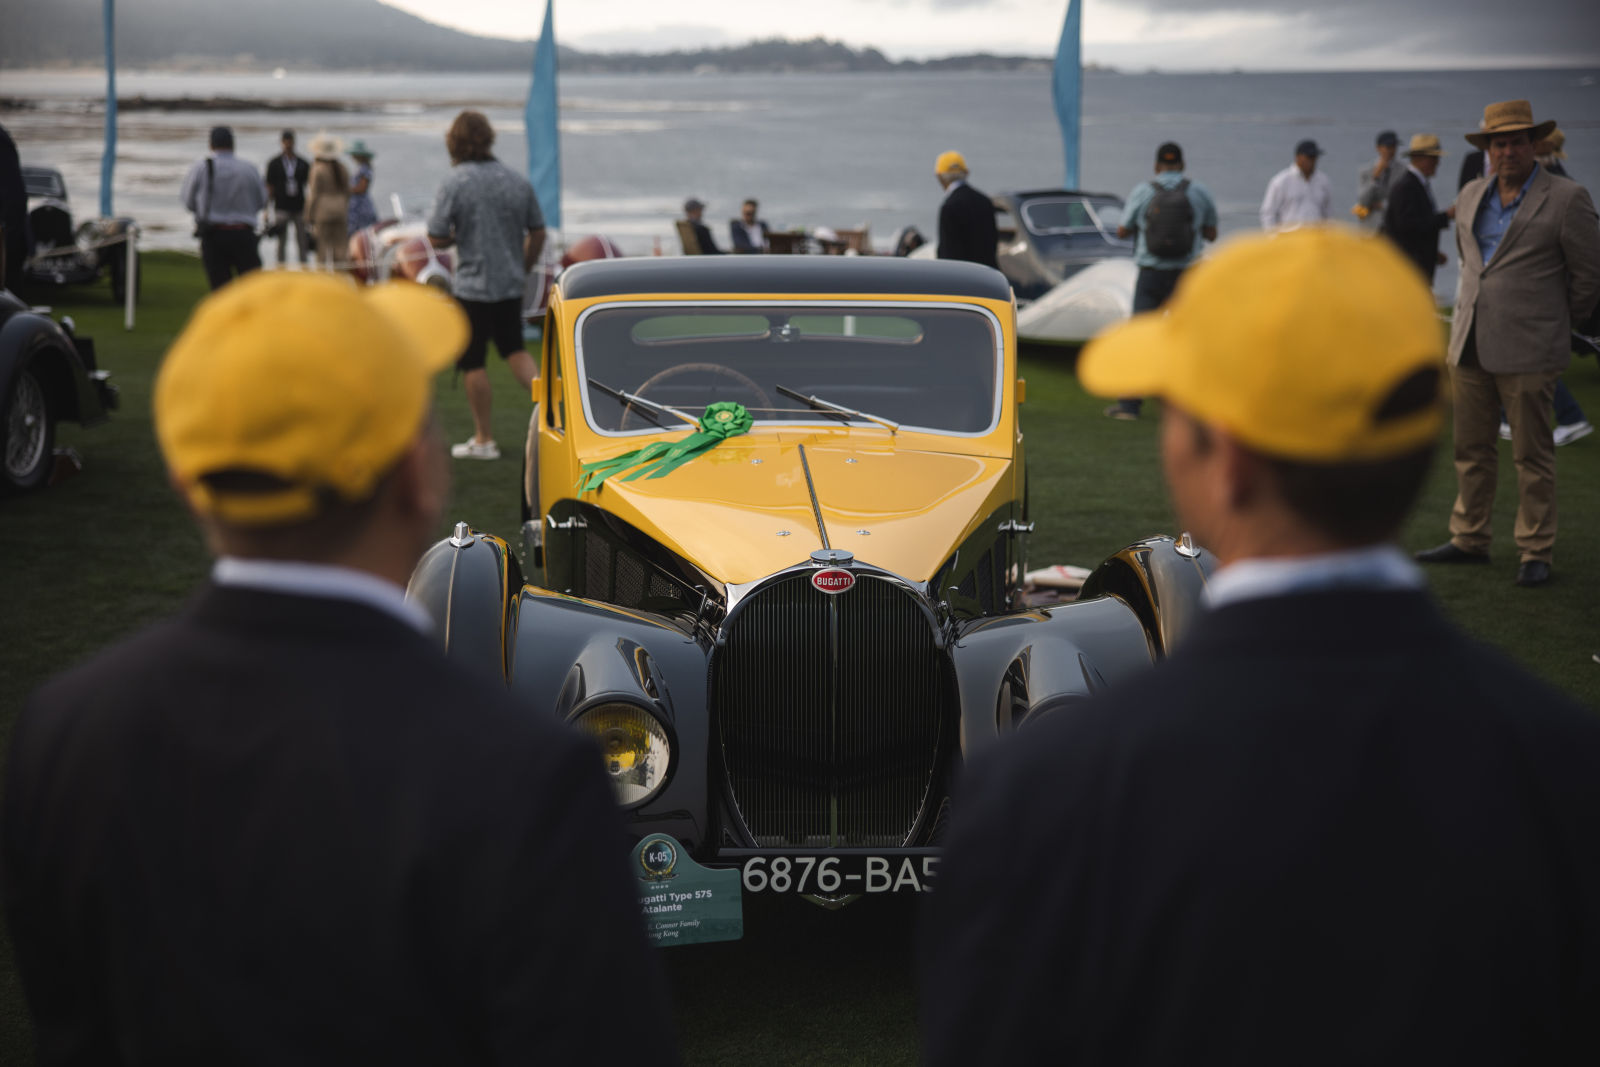 Bugatti 57S Atalante - Concours d'Elegance on the Pebble Beach golf course - Monterey Car Week